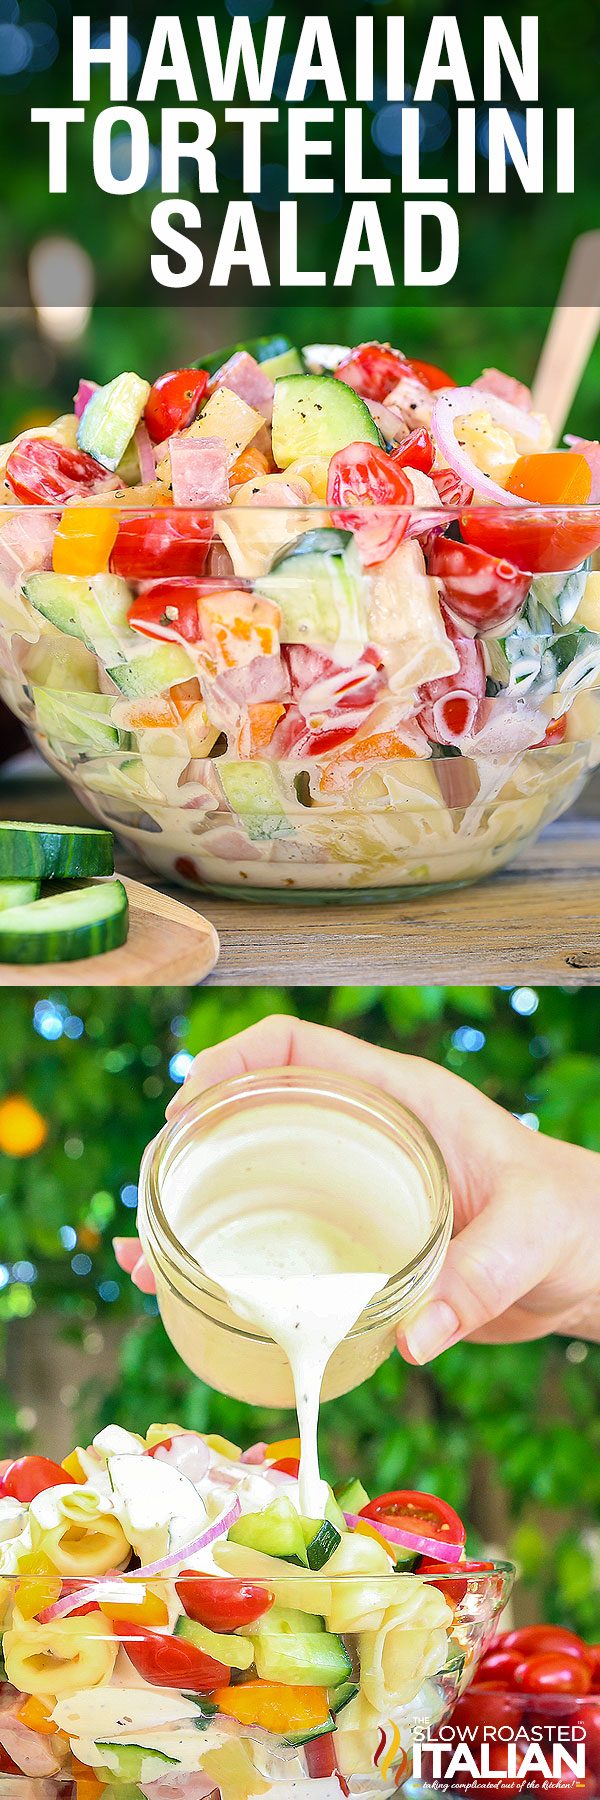 titled image collage for hawaiian tortellini pasta salad